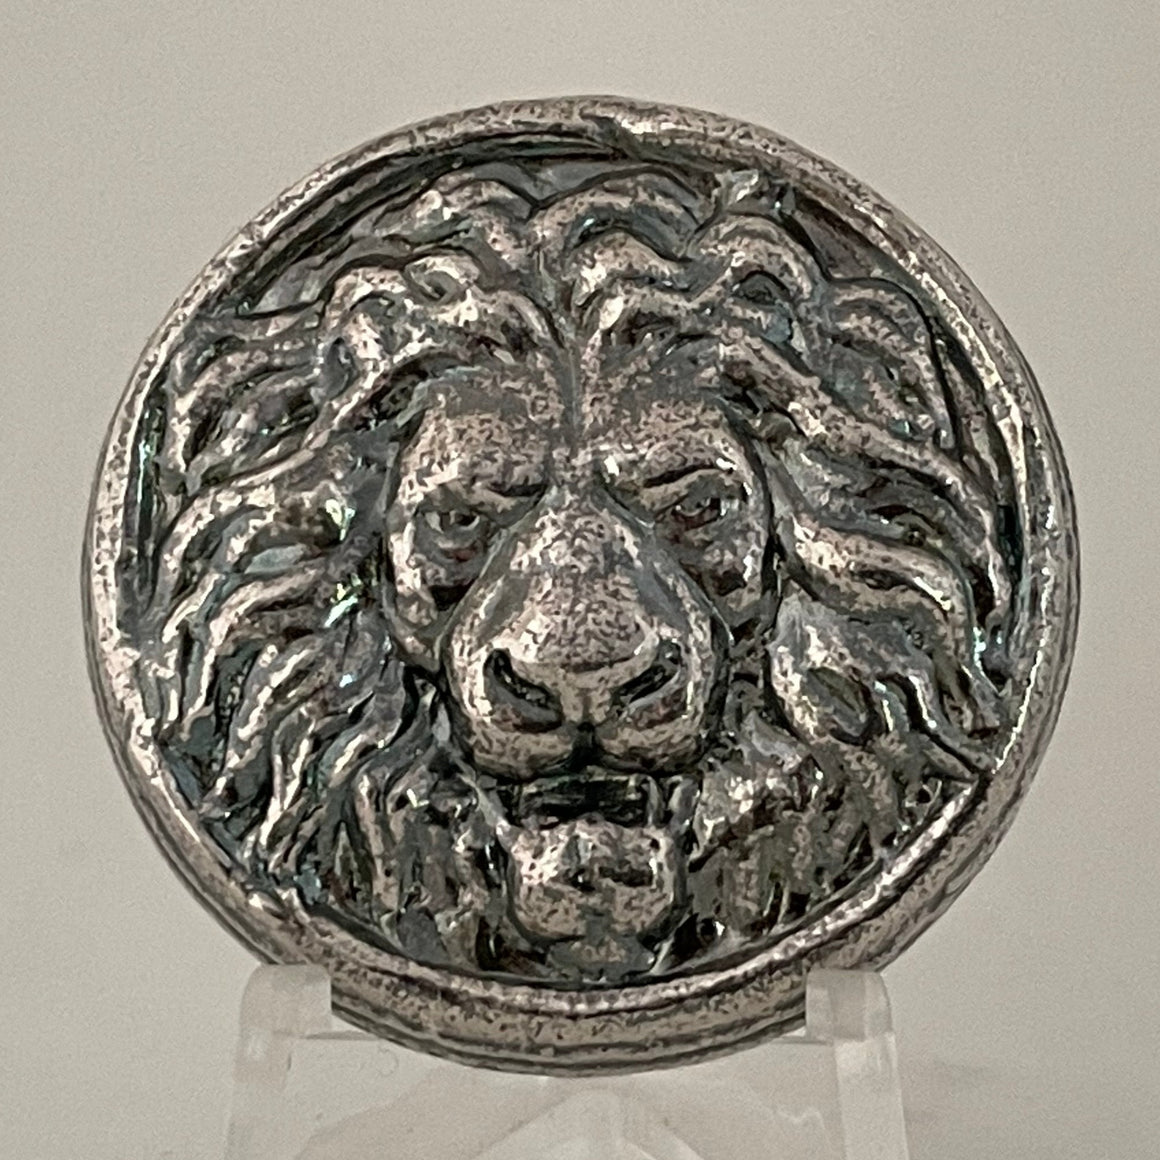 Toned Lion Head Shield by Tomoko's Enterprize, 2.5oz .999 Fine Silver Hand Poured Art